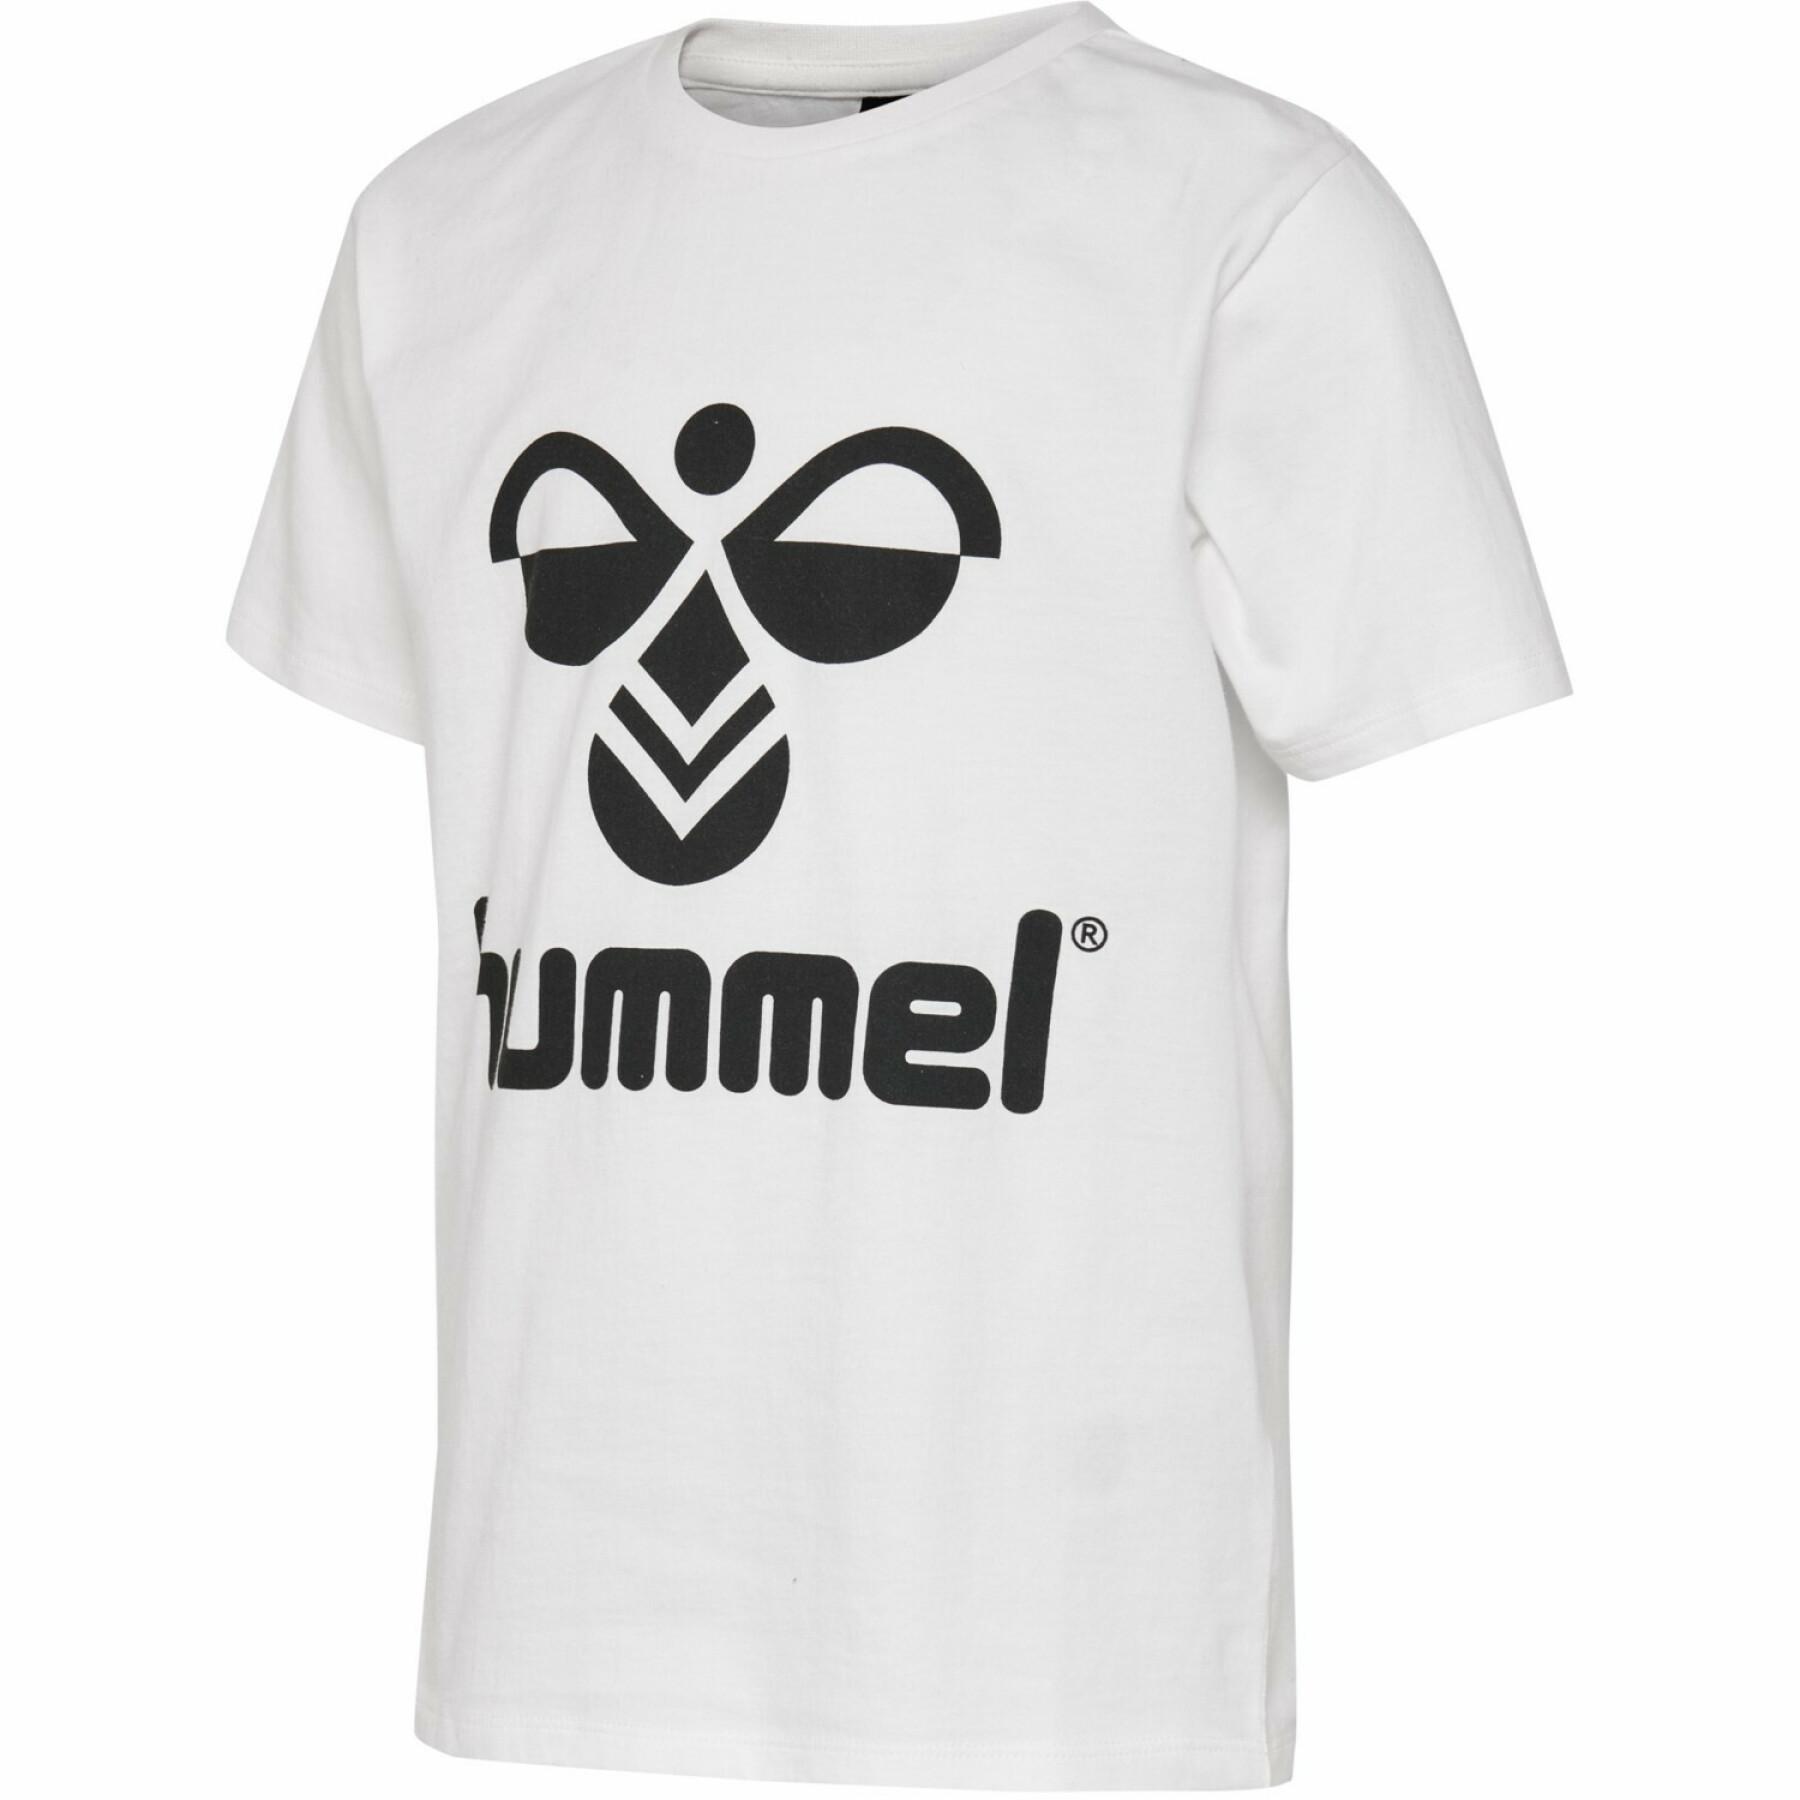 Child's T-shirt Hummel hmltres